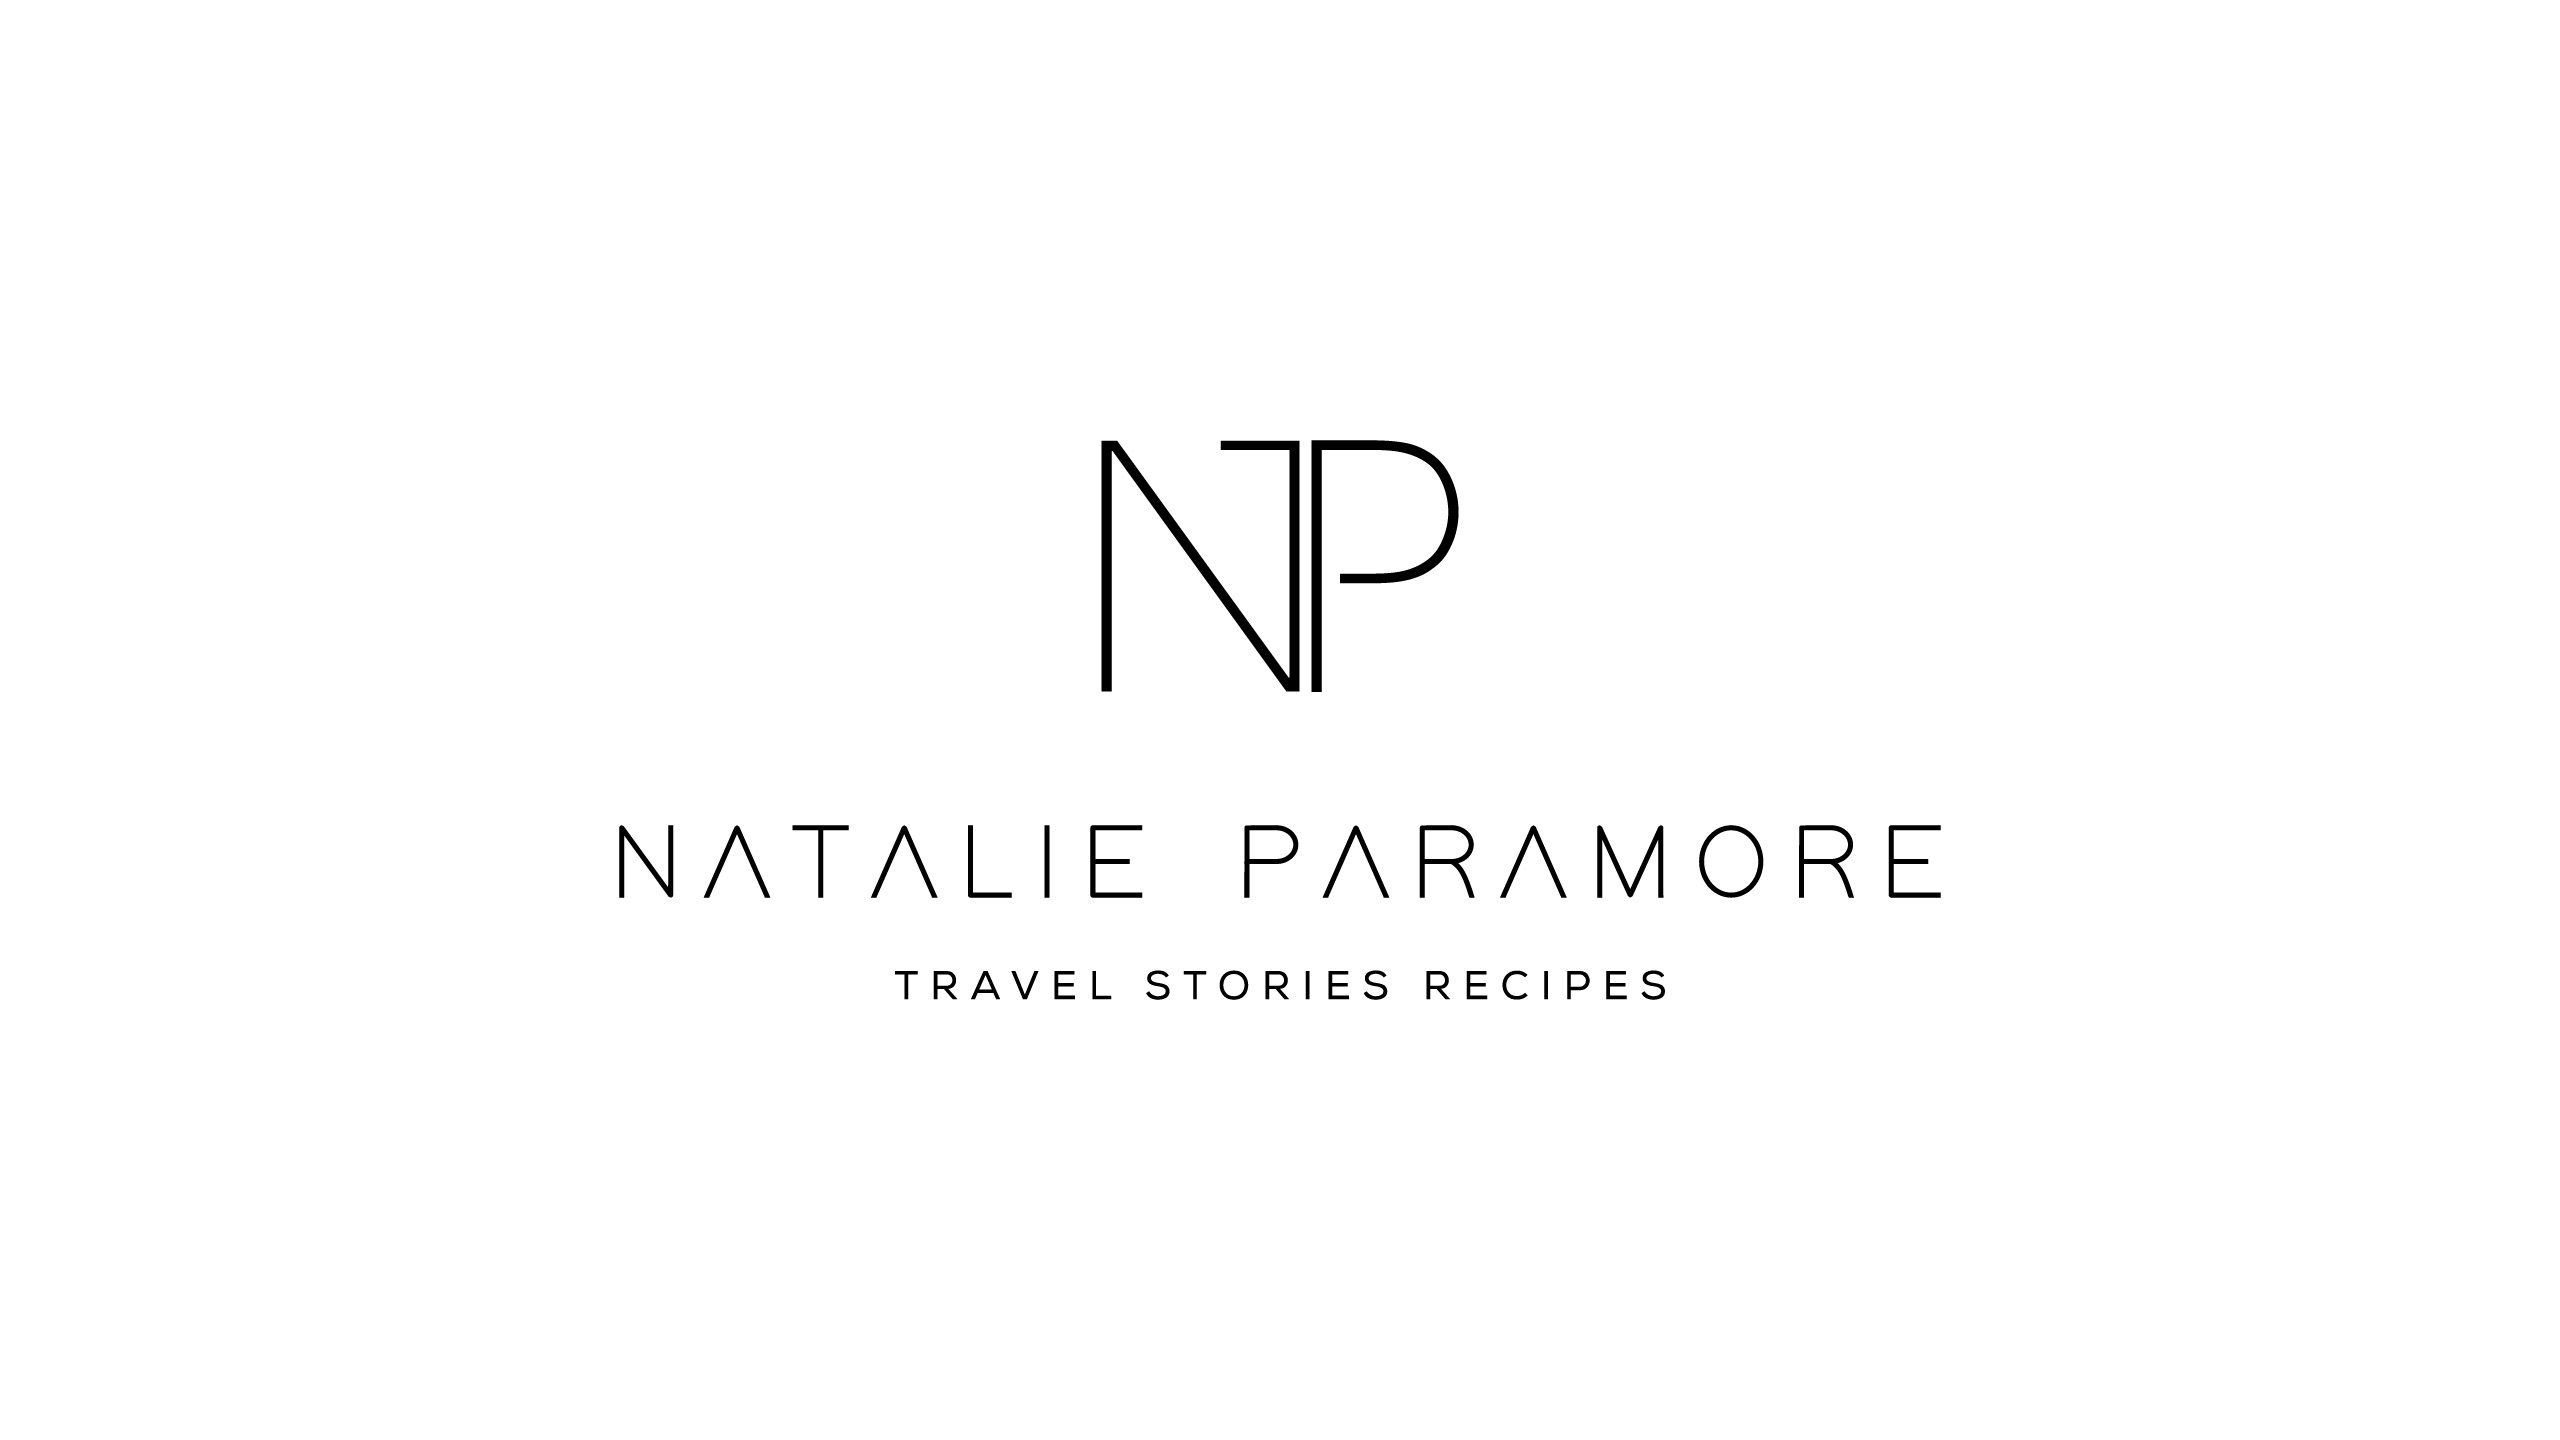 Natalie Paramore